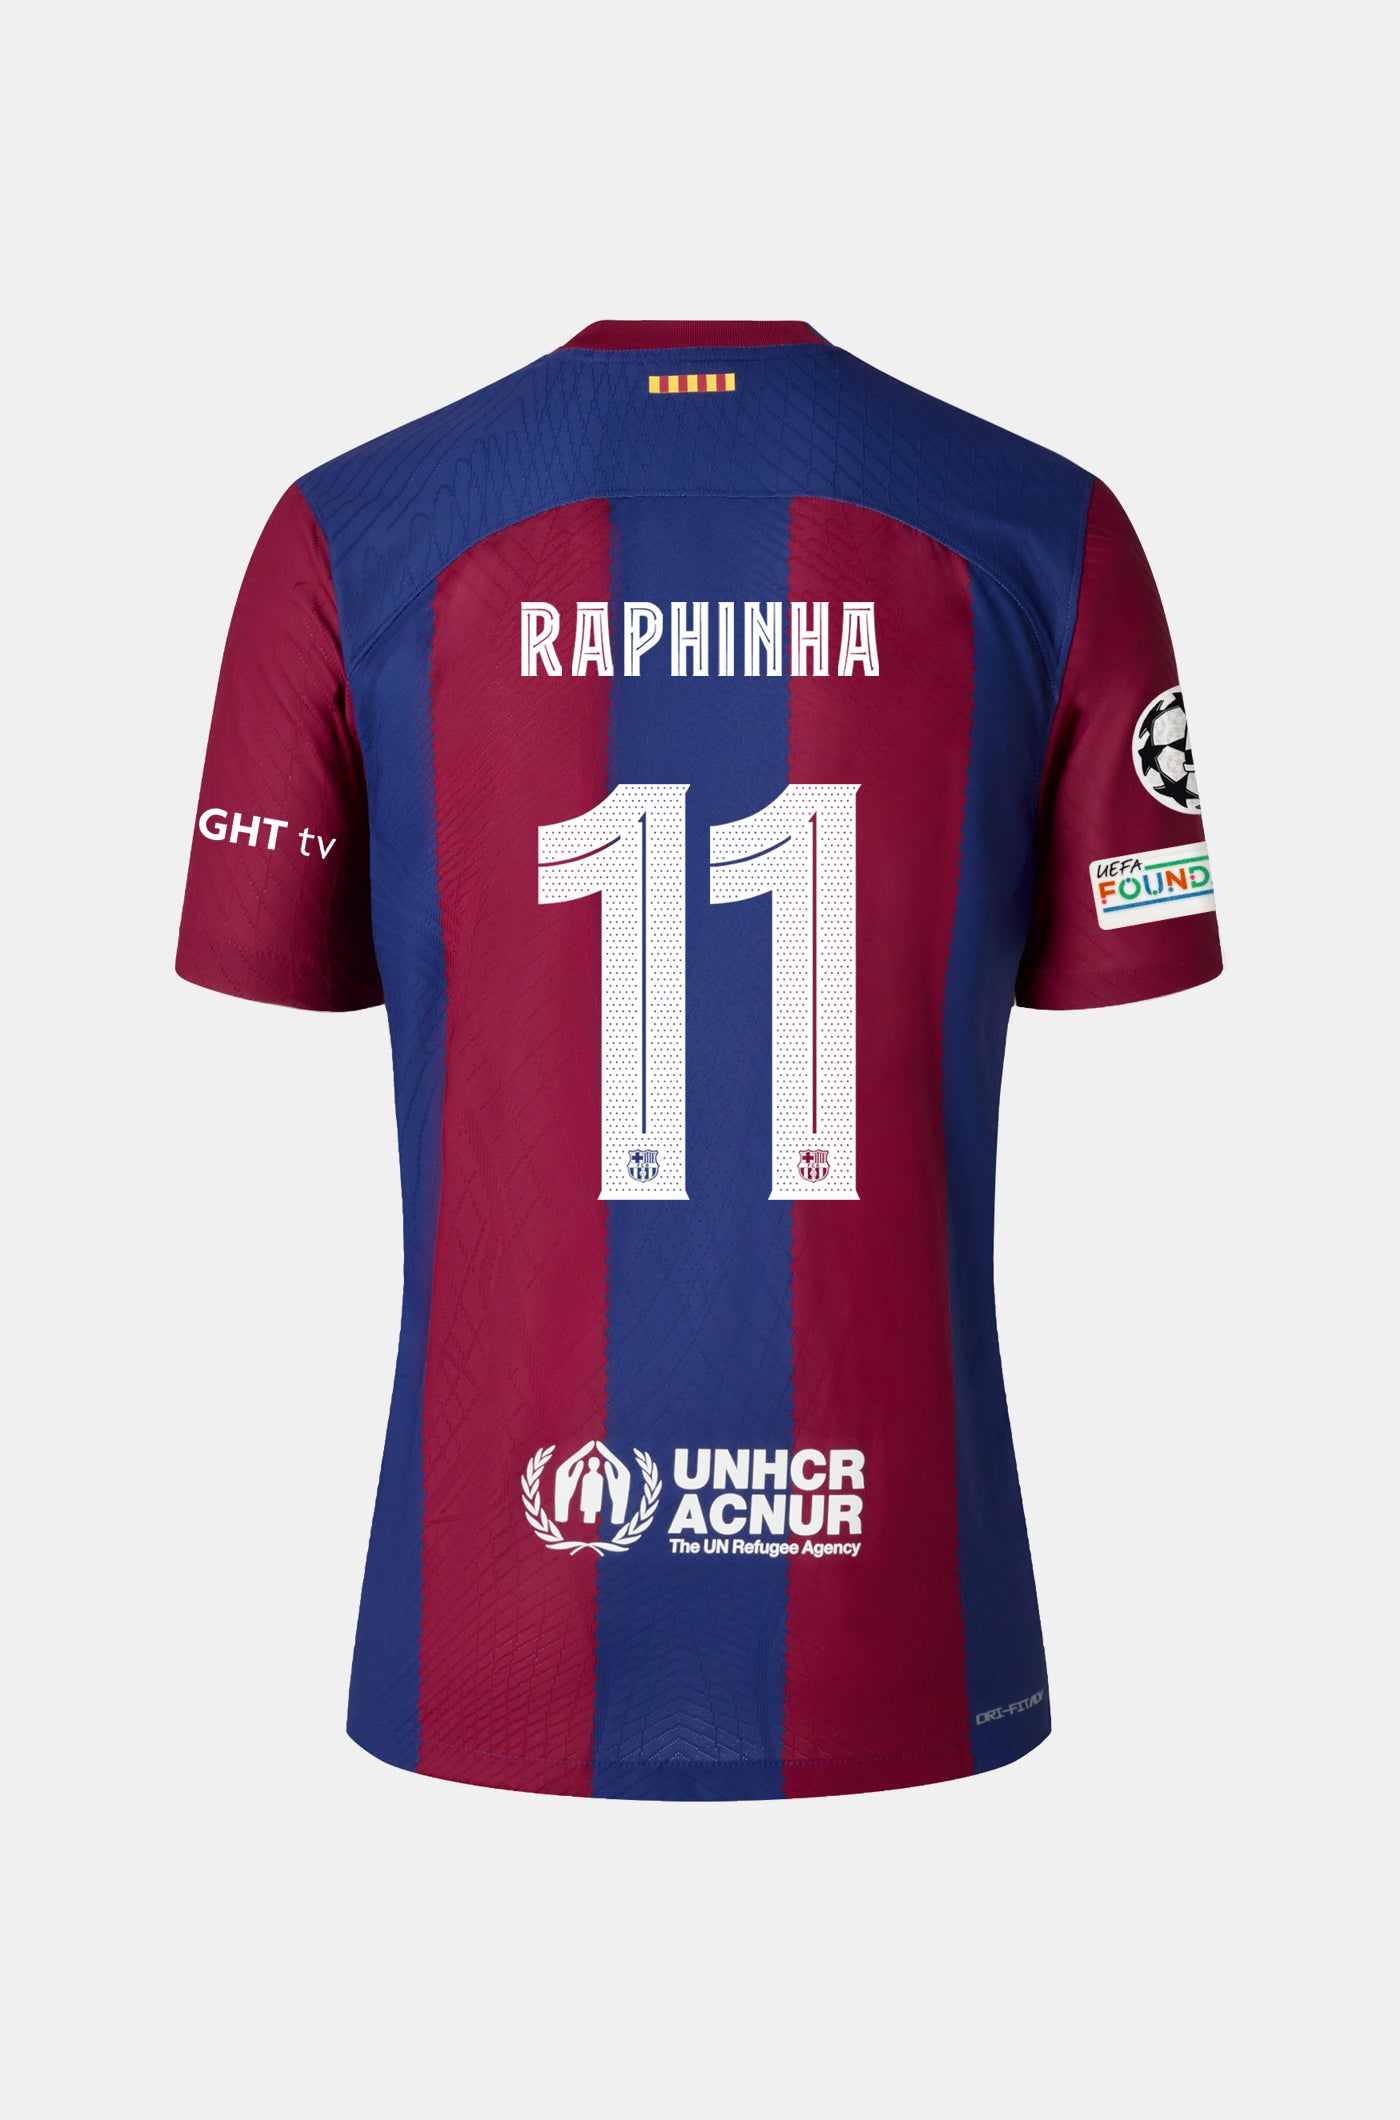 UCL FC Barcelona home shirt 23/24 - Women - RAPHINHA